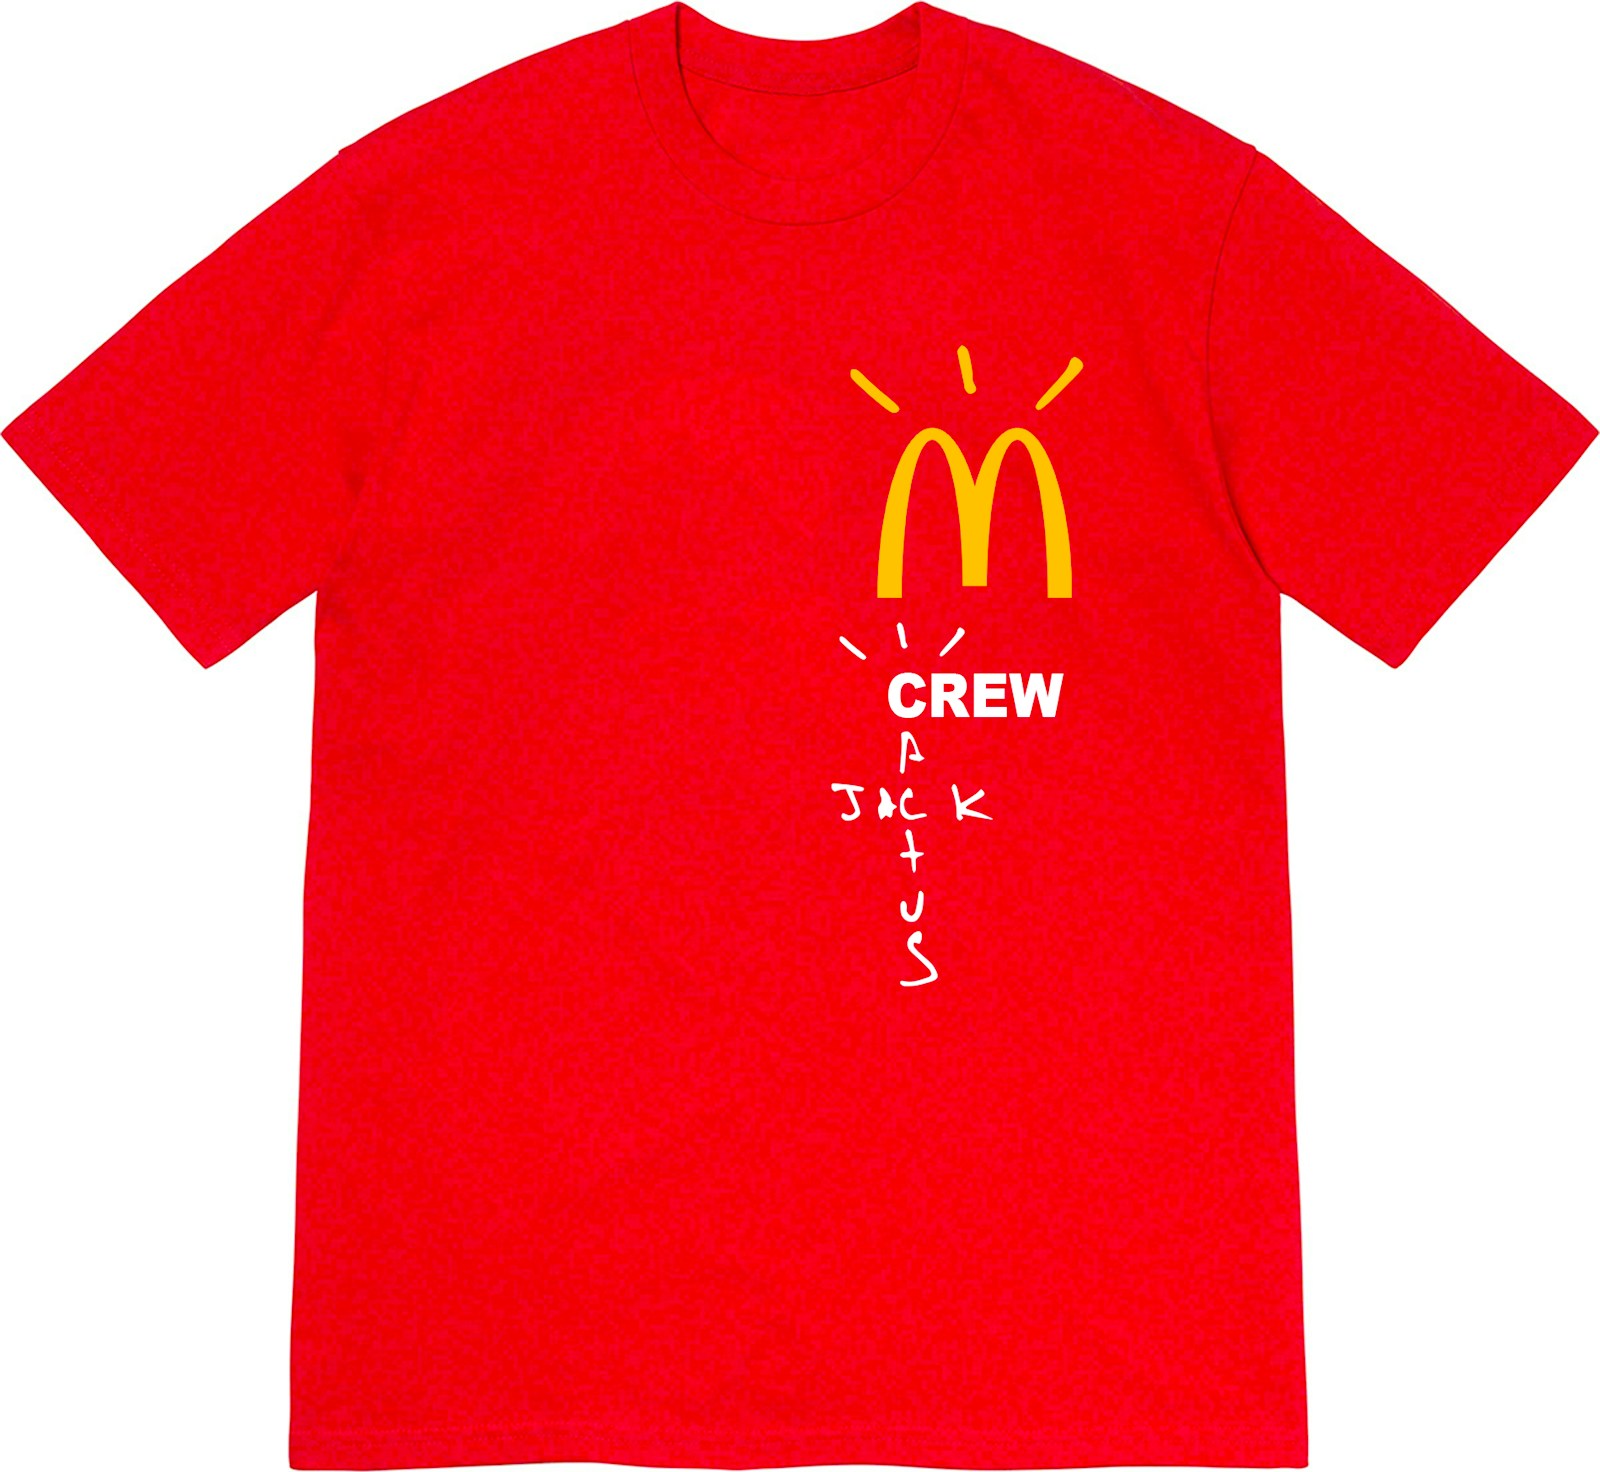 Travis Scott x McDonald's Crew T-Shirt Red - FW20